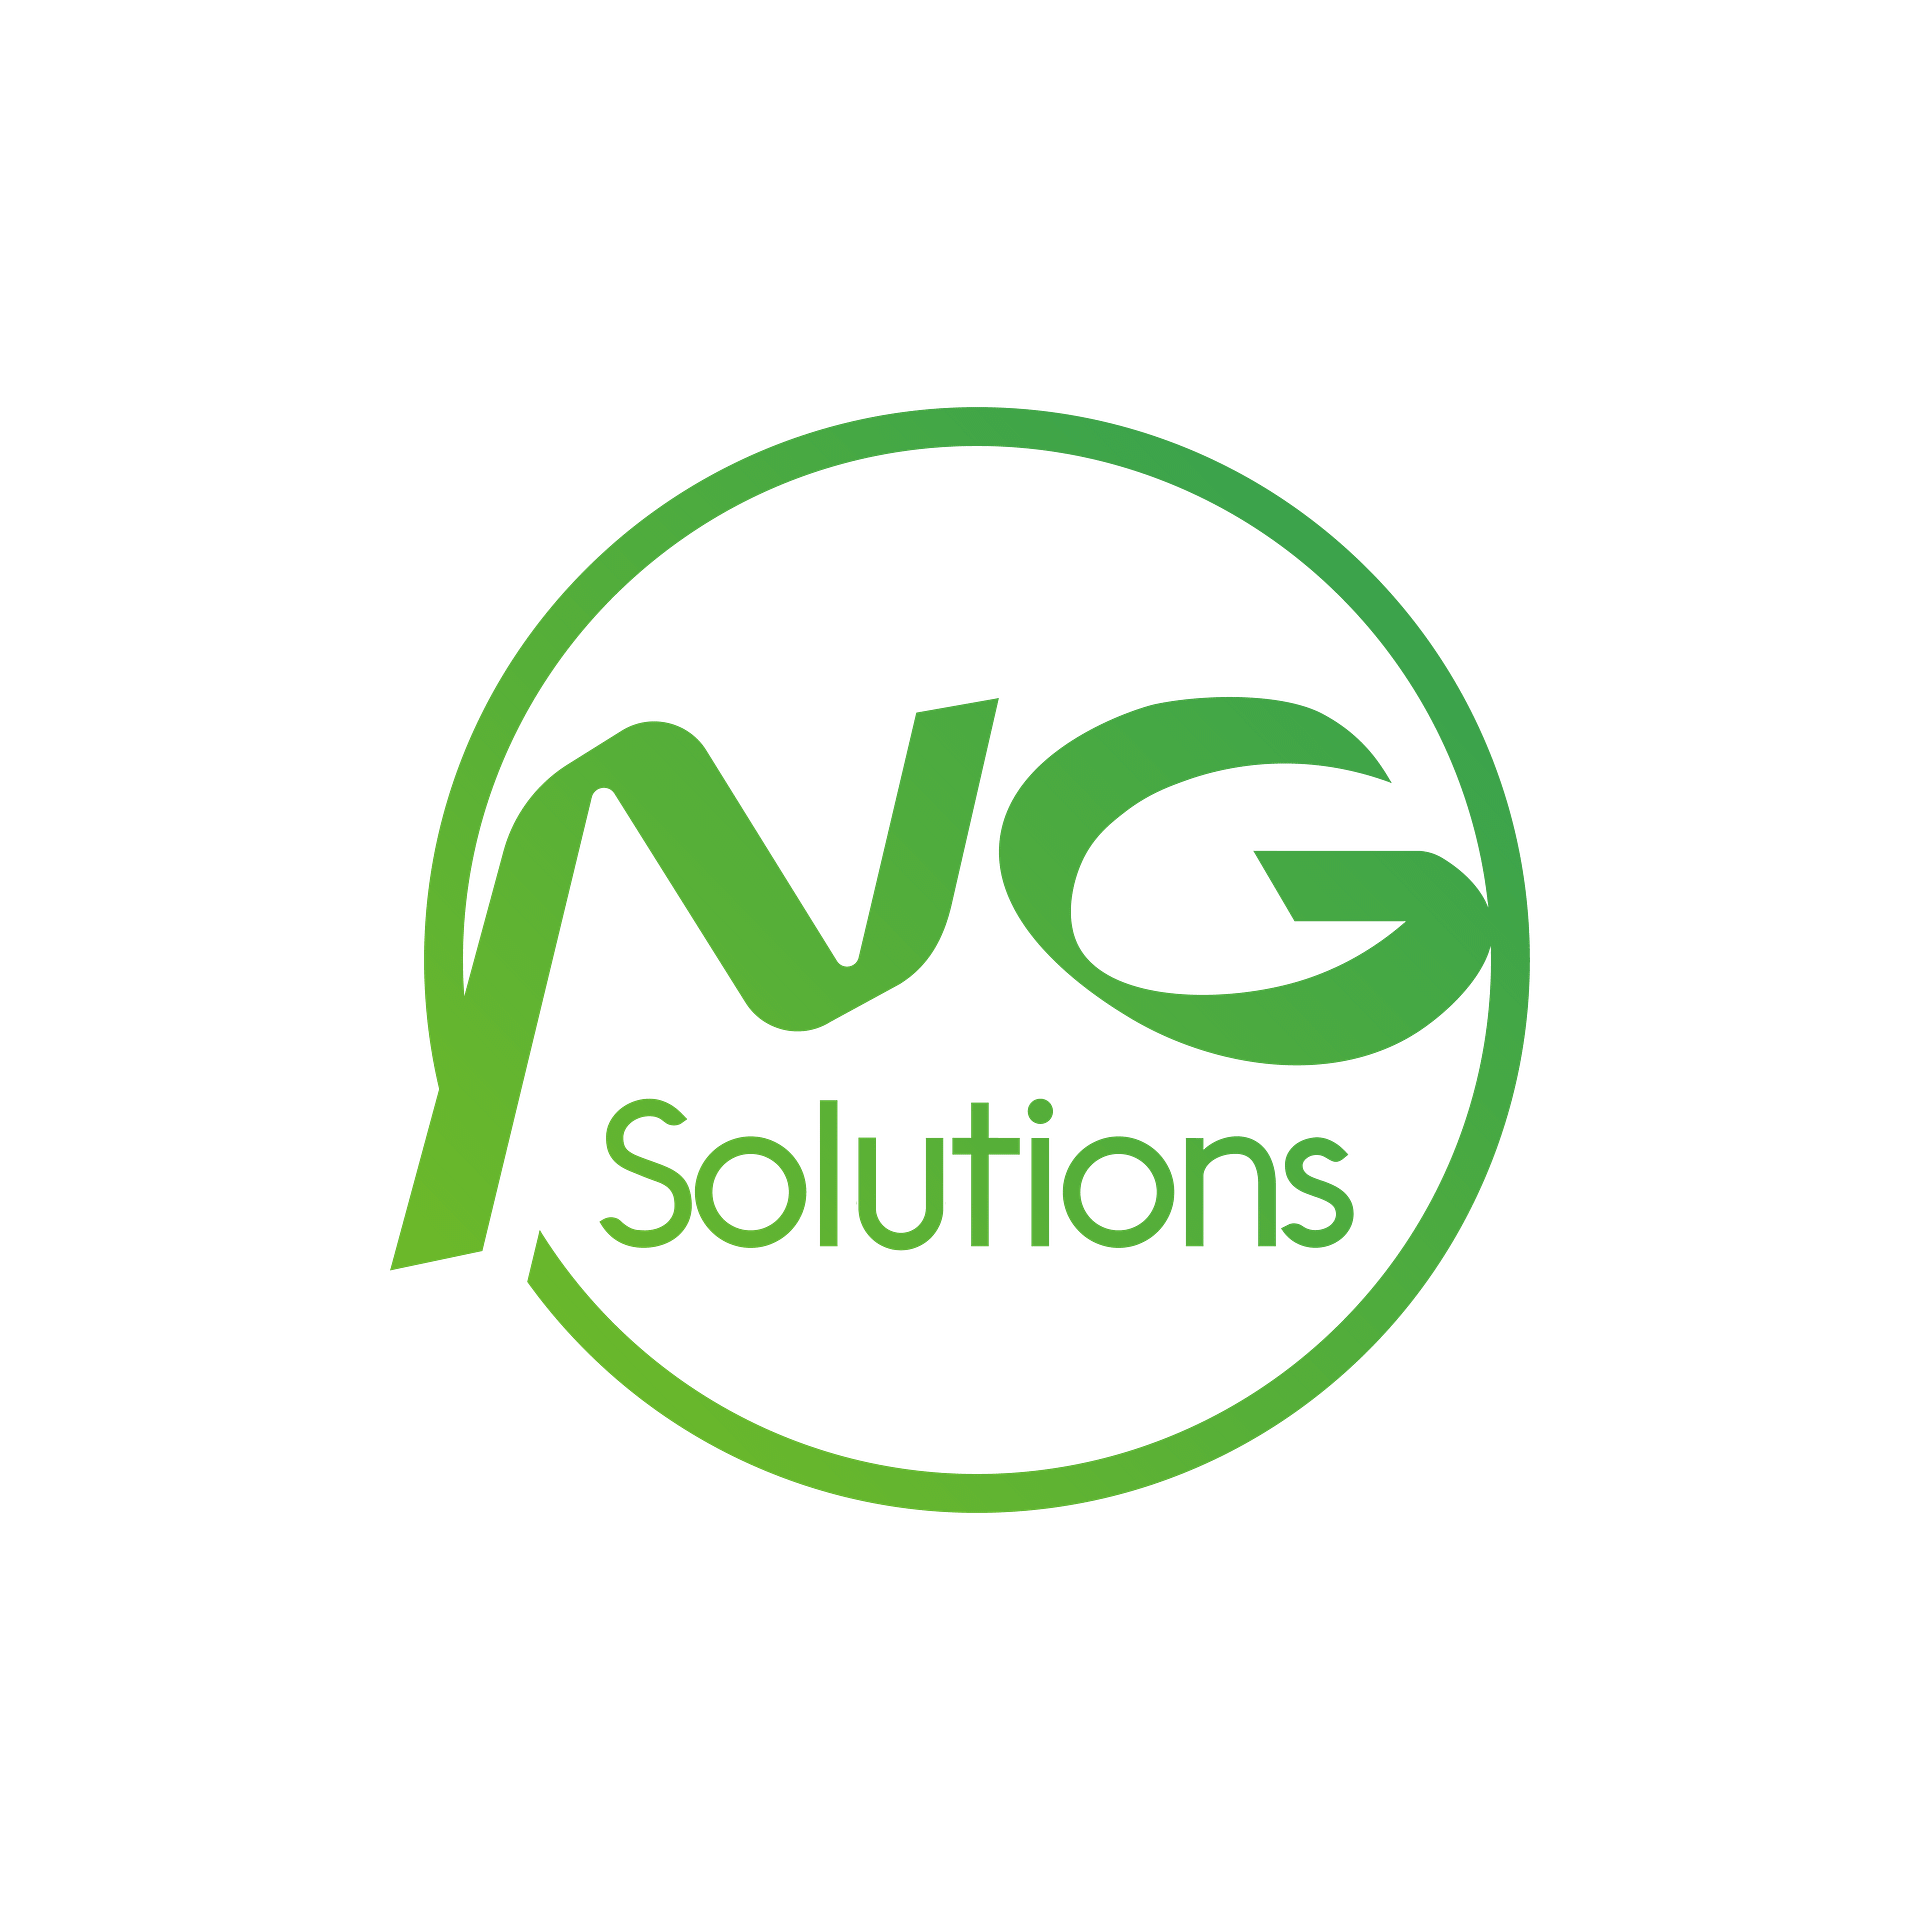 NG Solutions Blog - Cleaning, Health, Environment, etc. - NG Solutions